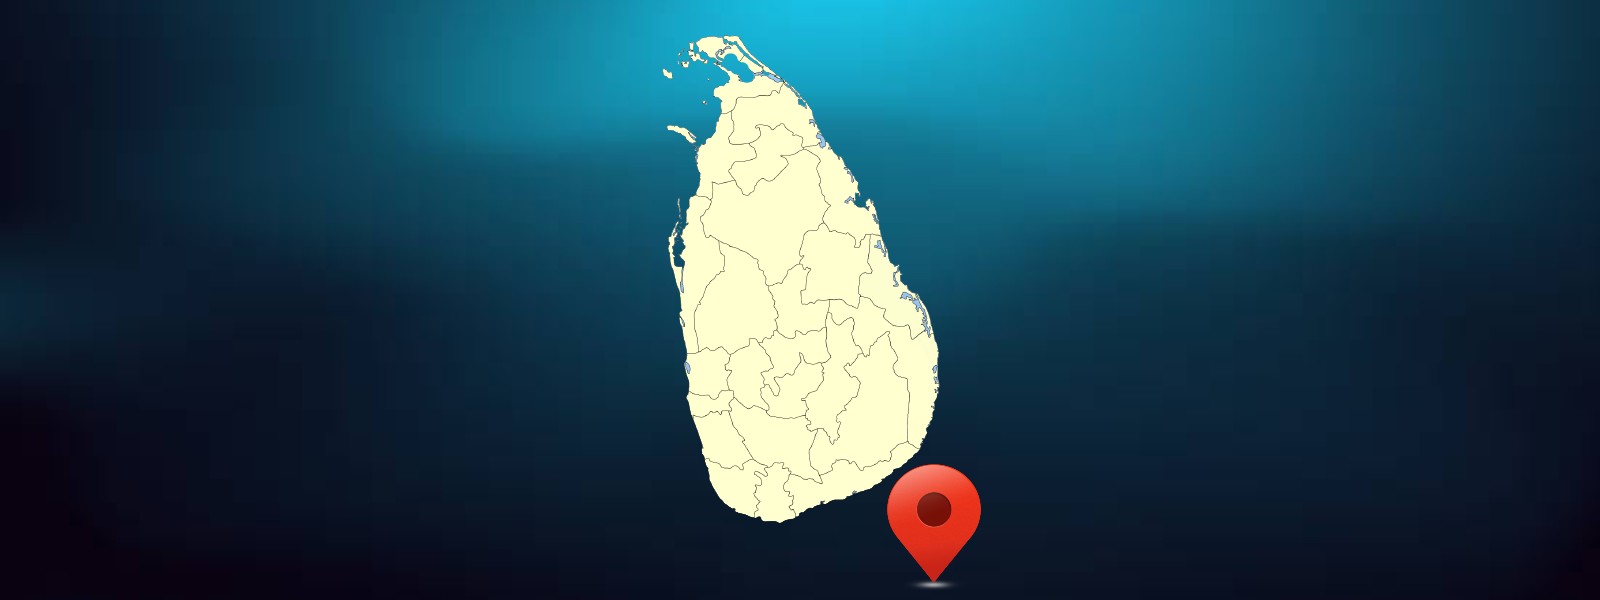 Magnitude 4.1 earthquake in deep seas South of Sri Lanka; NO tsunami threat